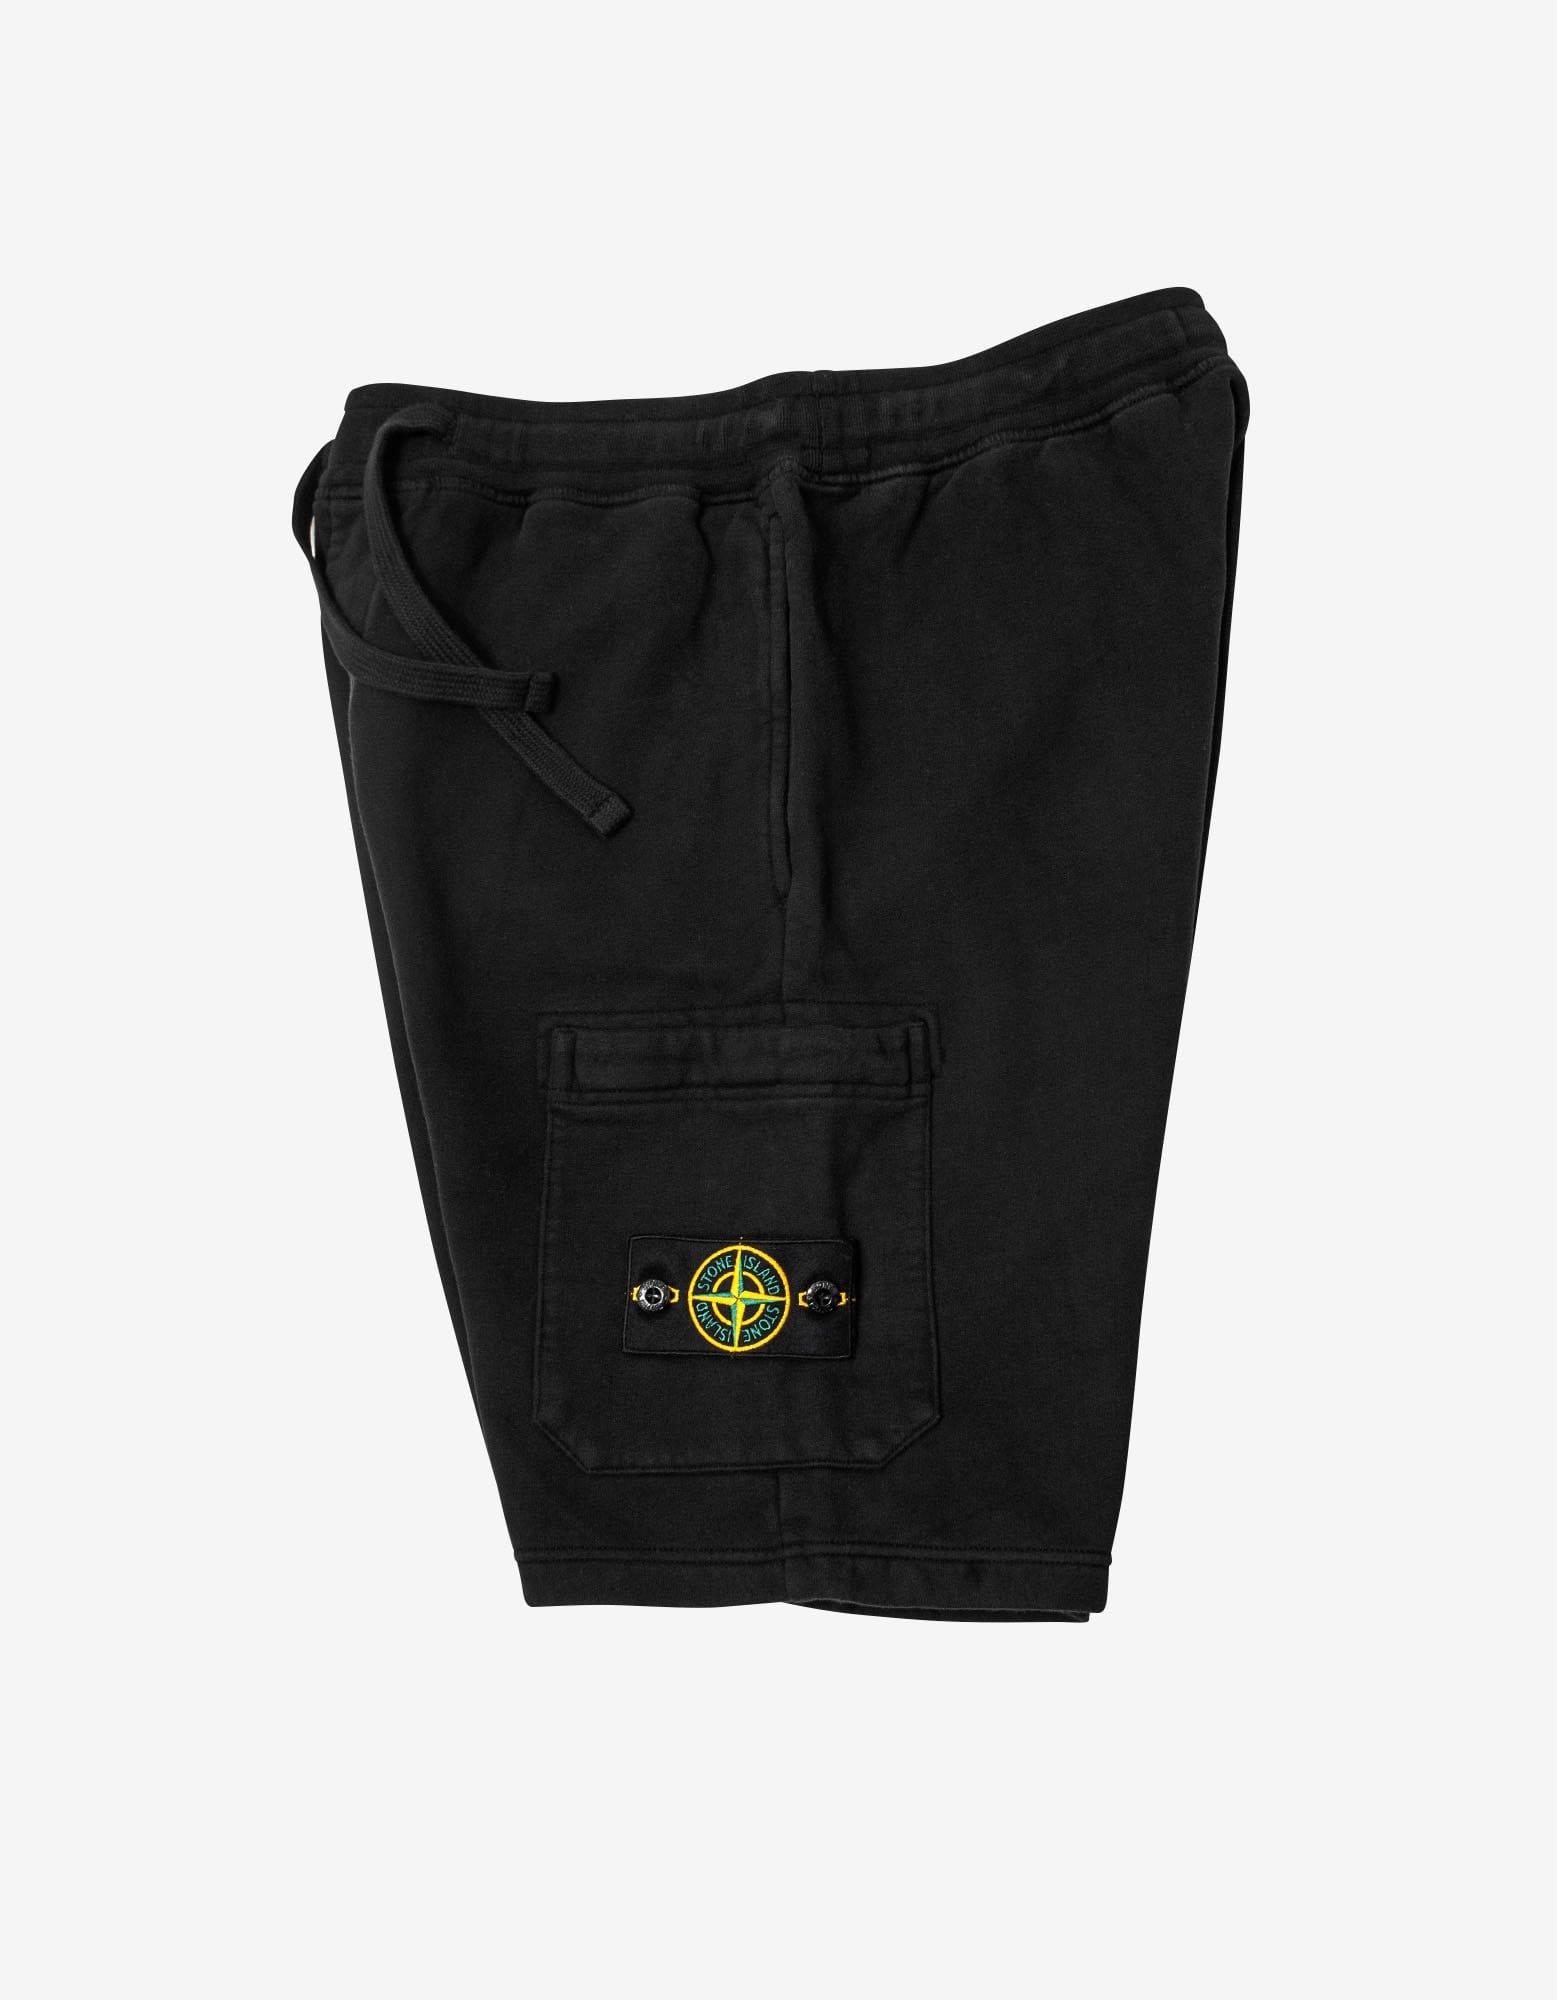 Stone Island Cotton Black Compass Badge Cargo Sweat Shorts for Men | Lyst